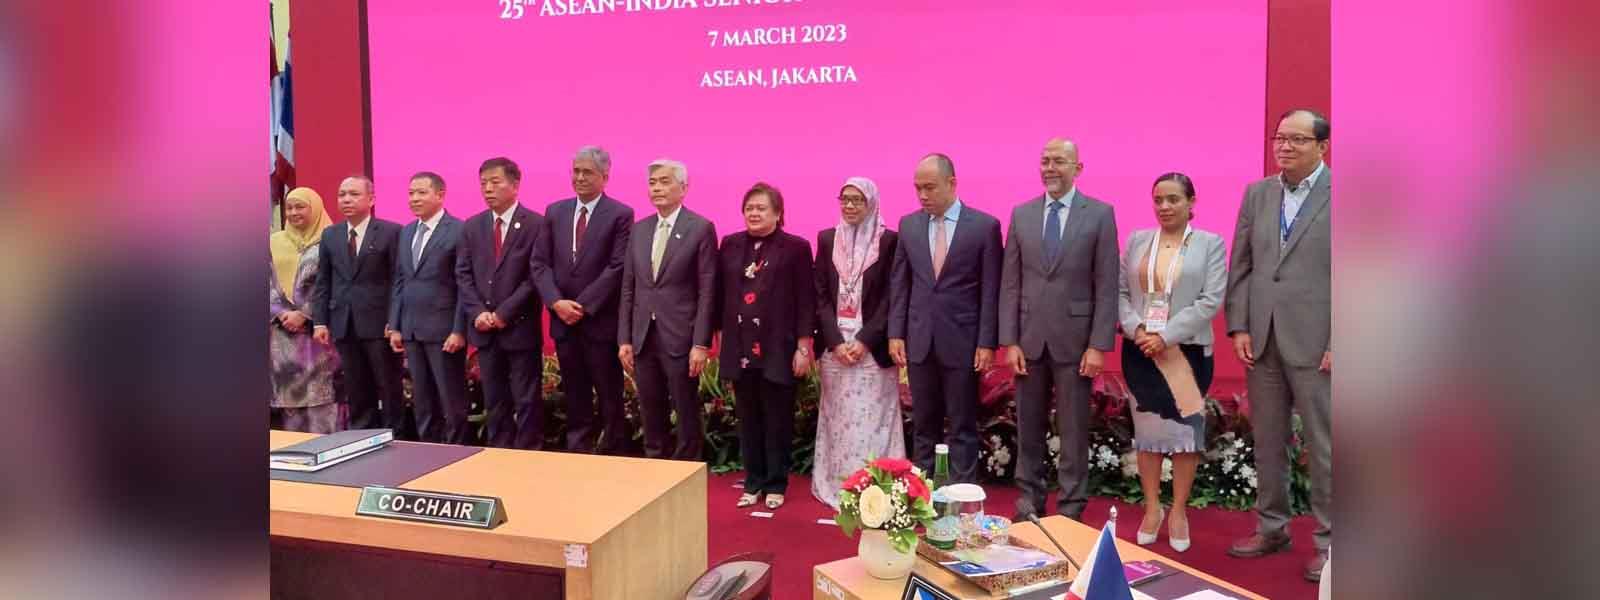 Secretary (East), Shri Saurabh Kumar co-chaired the 25th ASEAN-India Senior Officials' Meeting in Jakarta